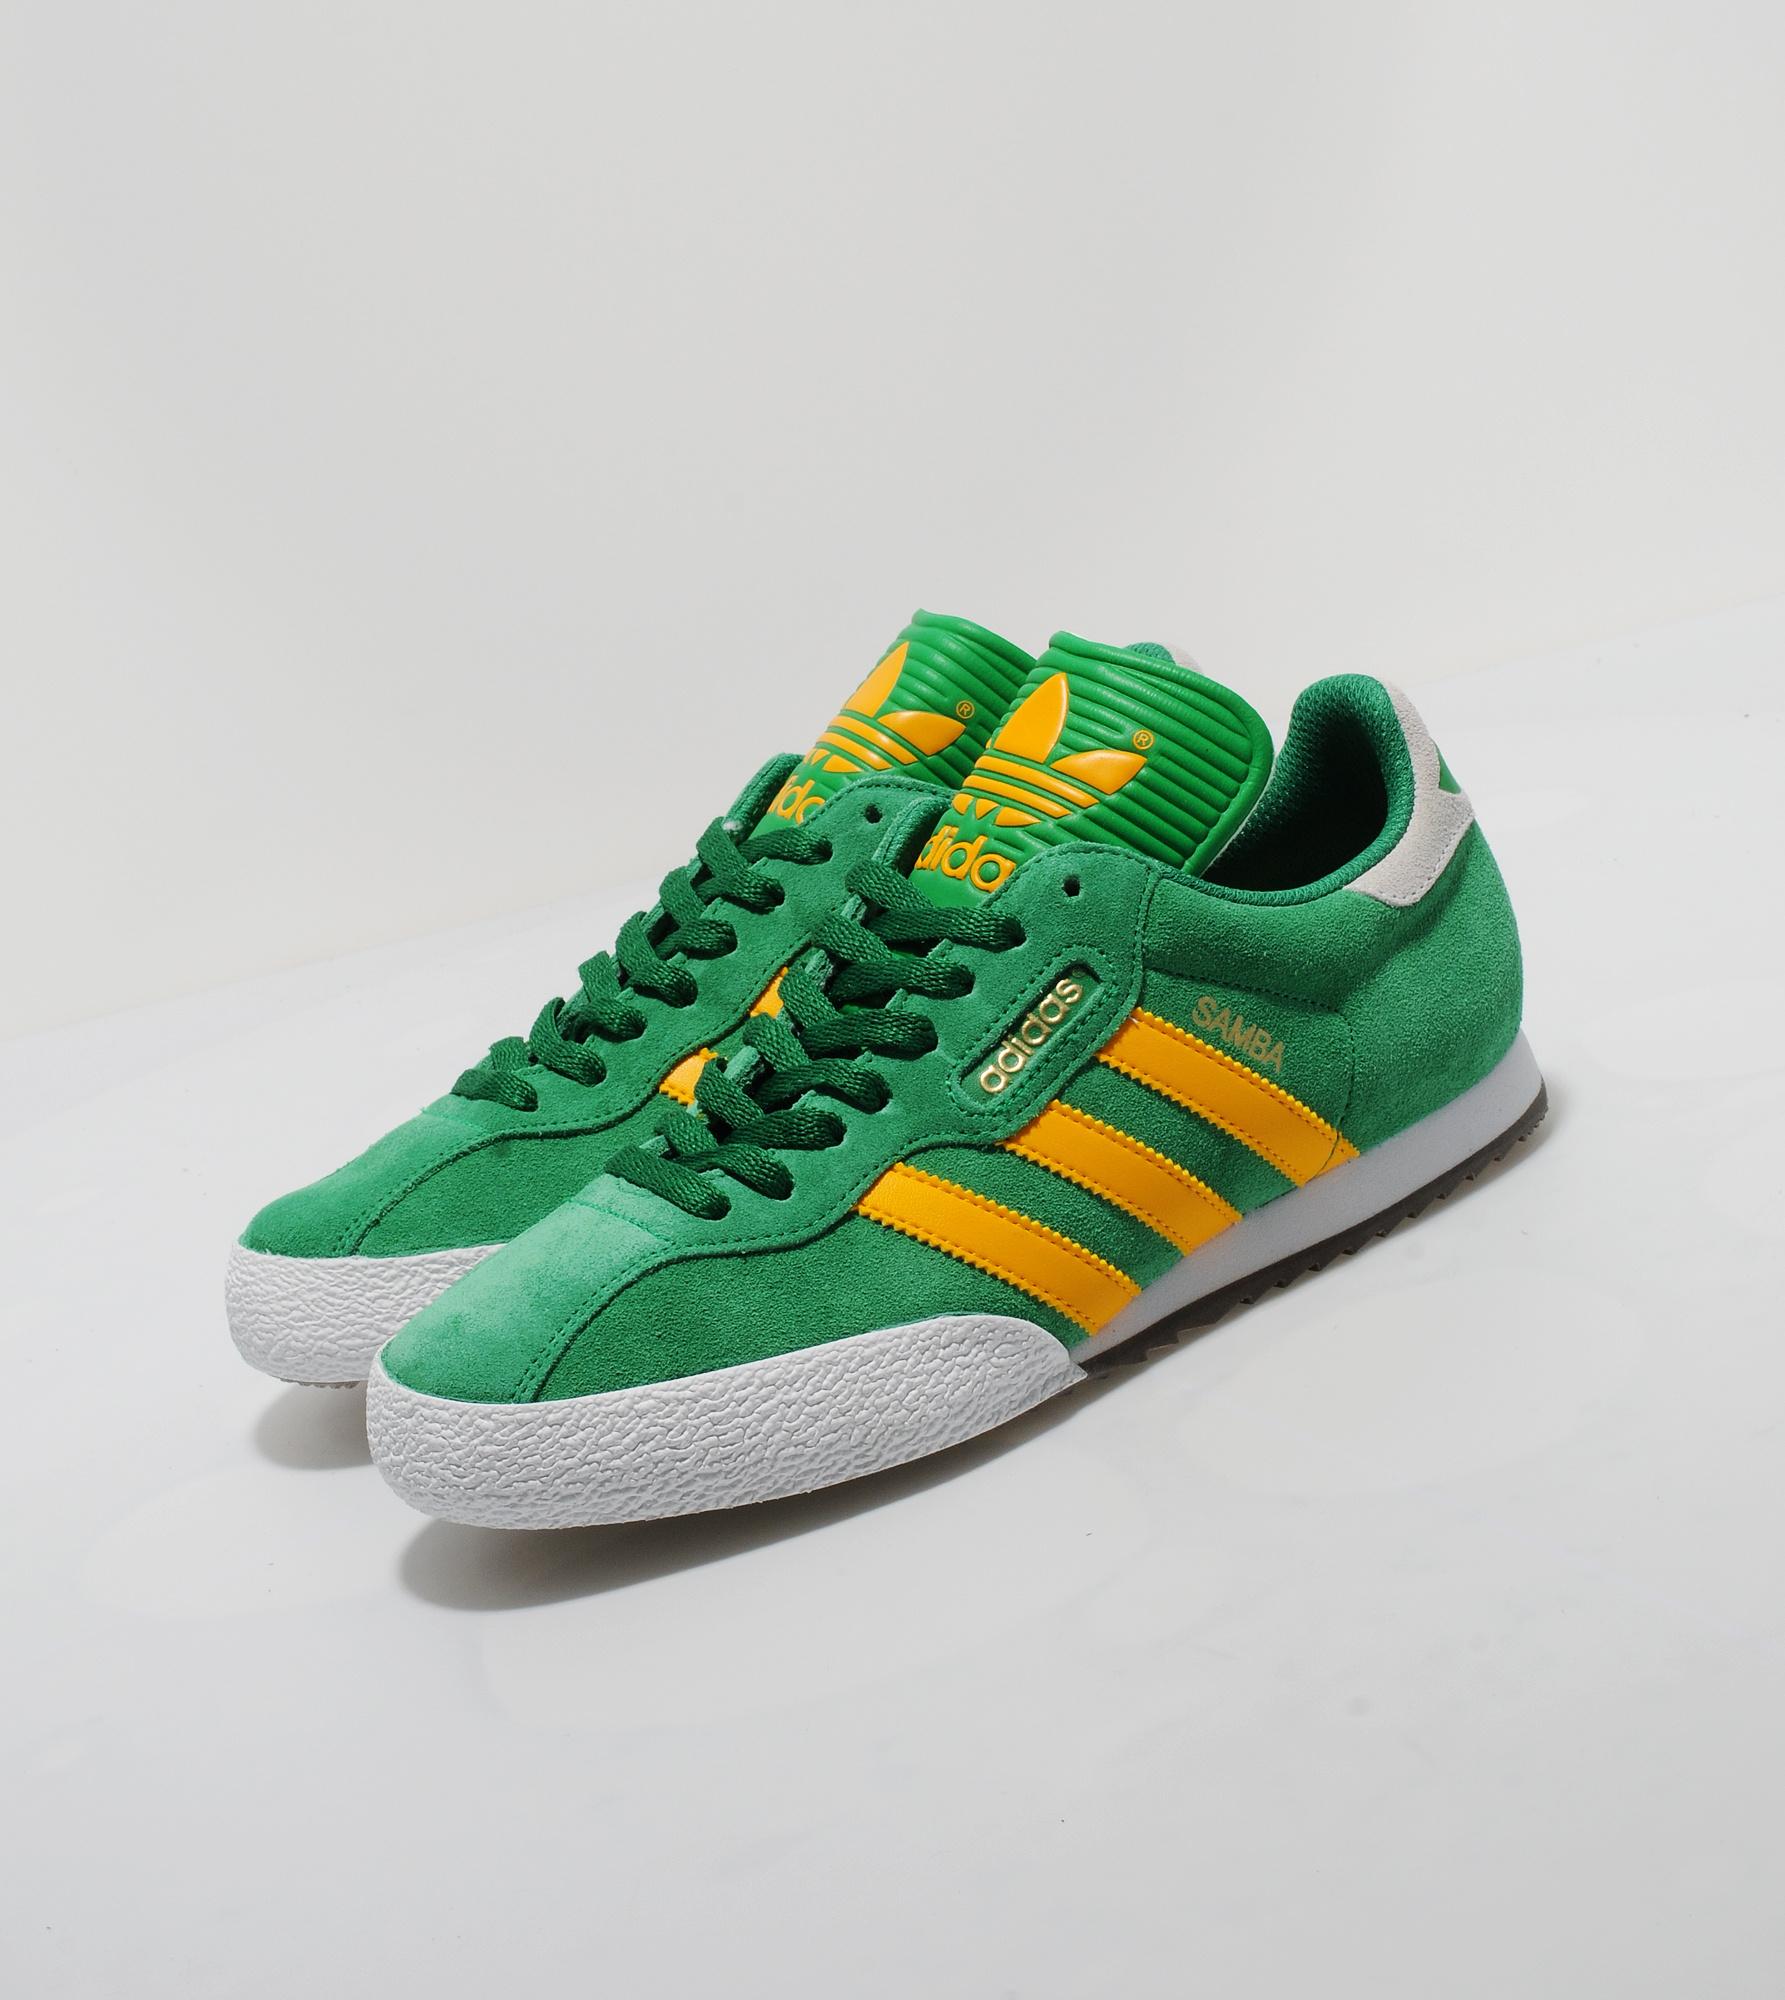 adidas samba green and yellow